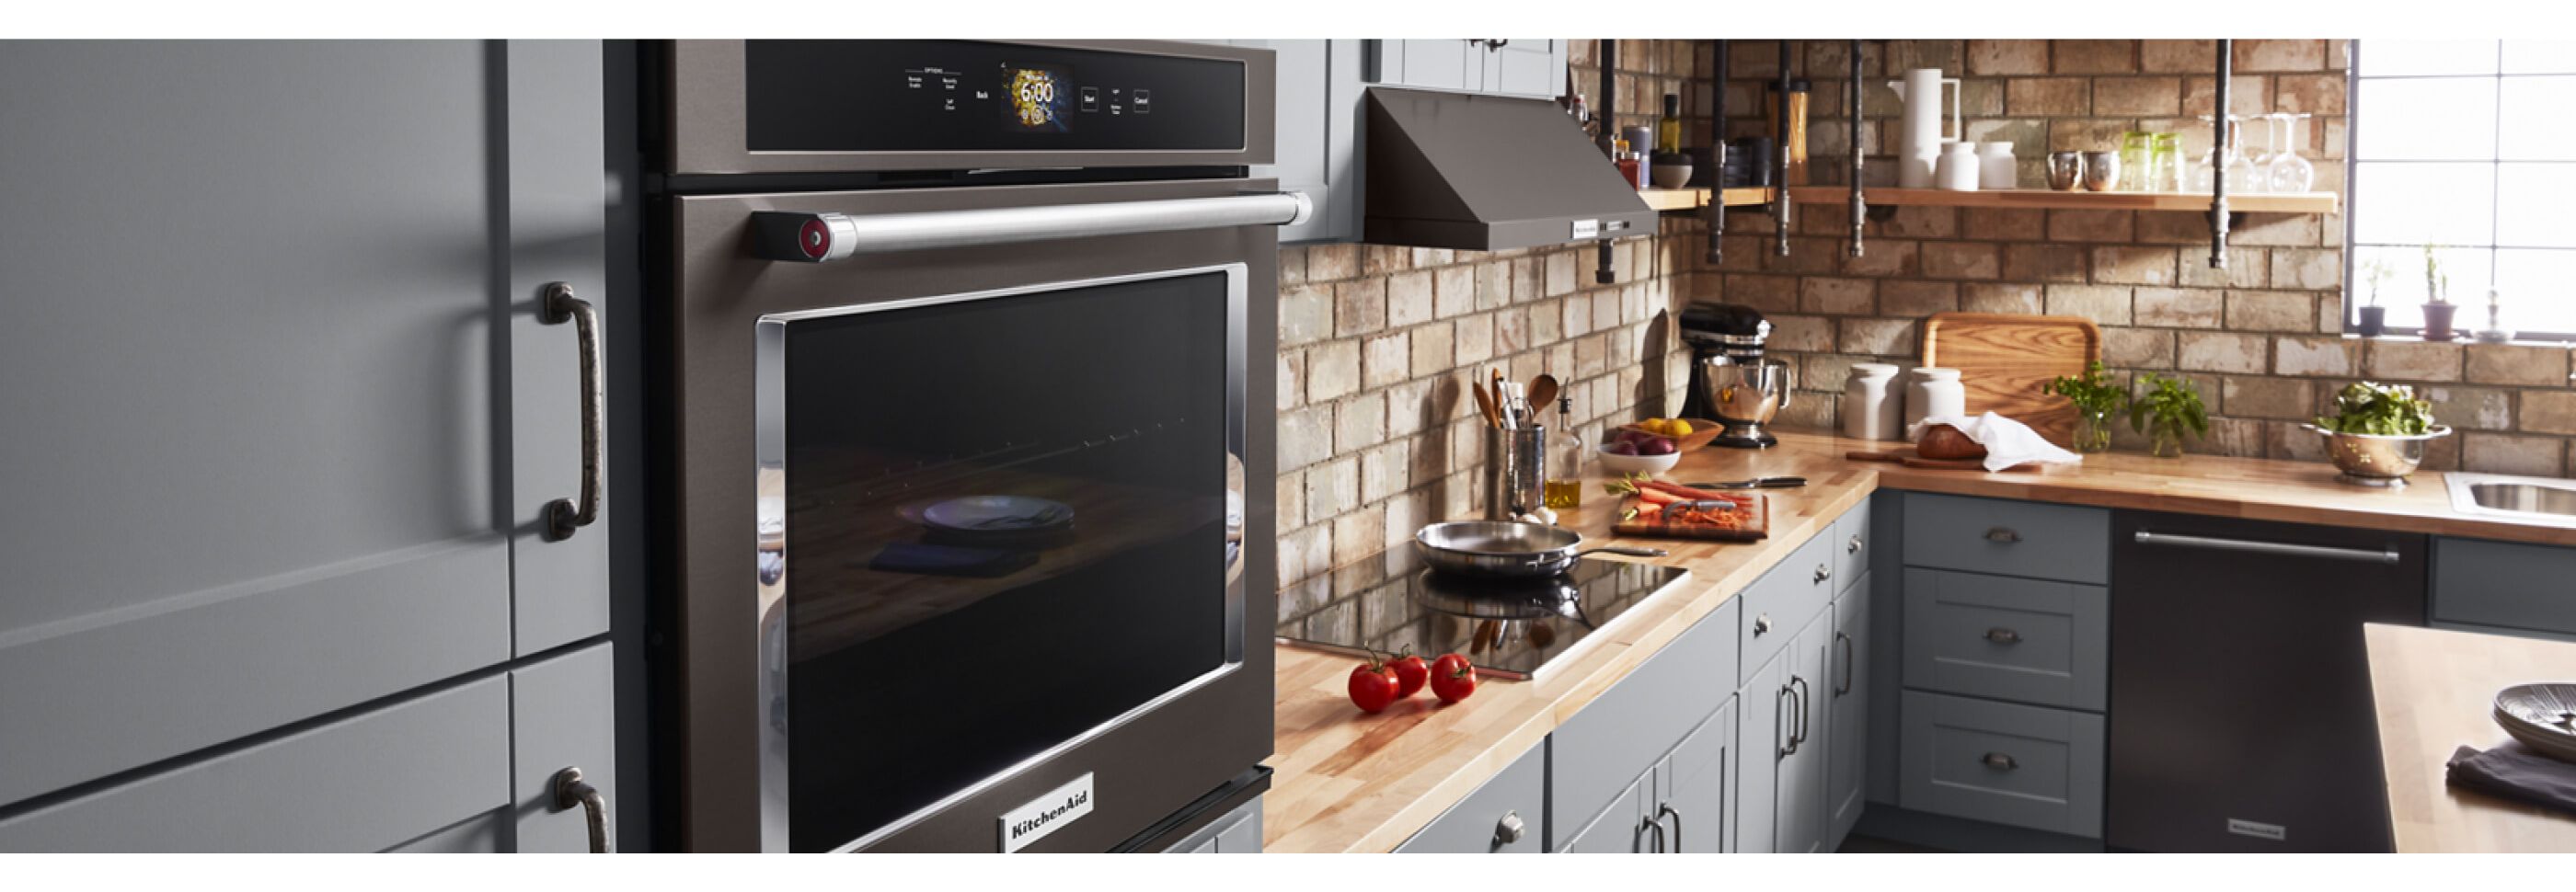 roddel Faial Bondgenoot Ovens & Wall Ovens | KitchenAid